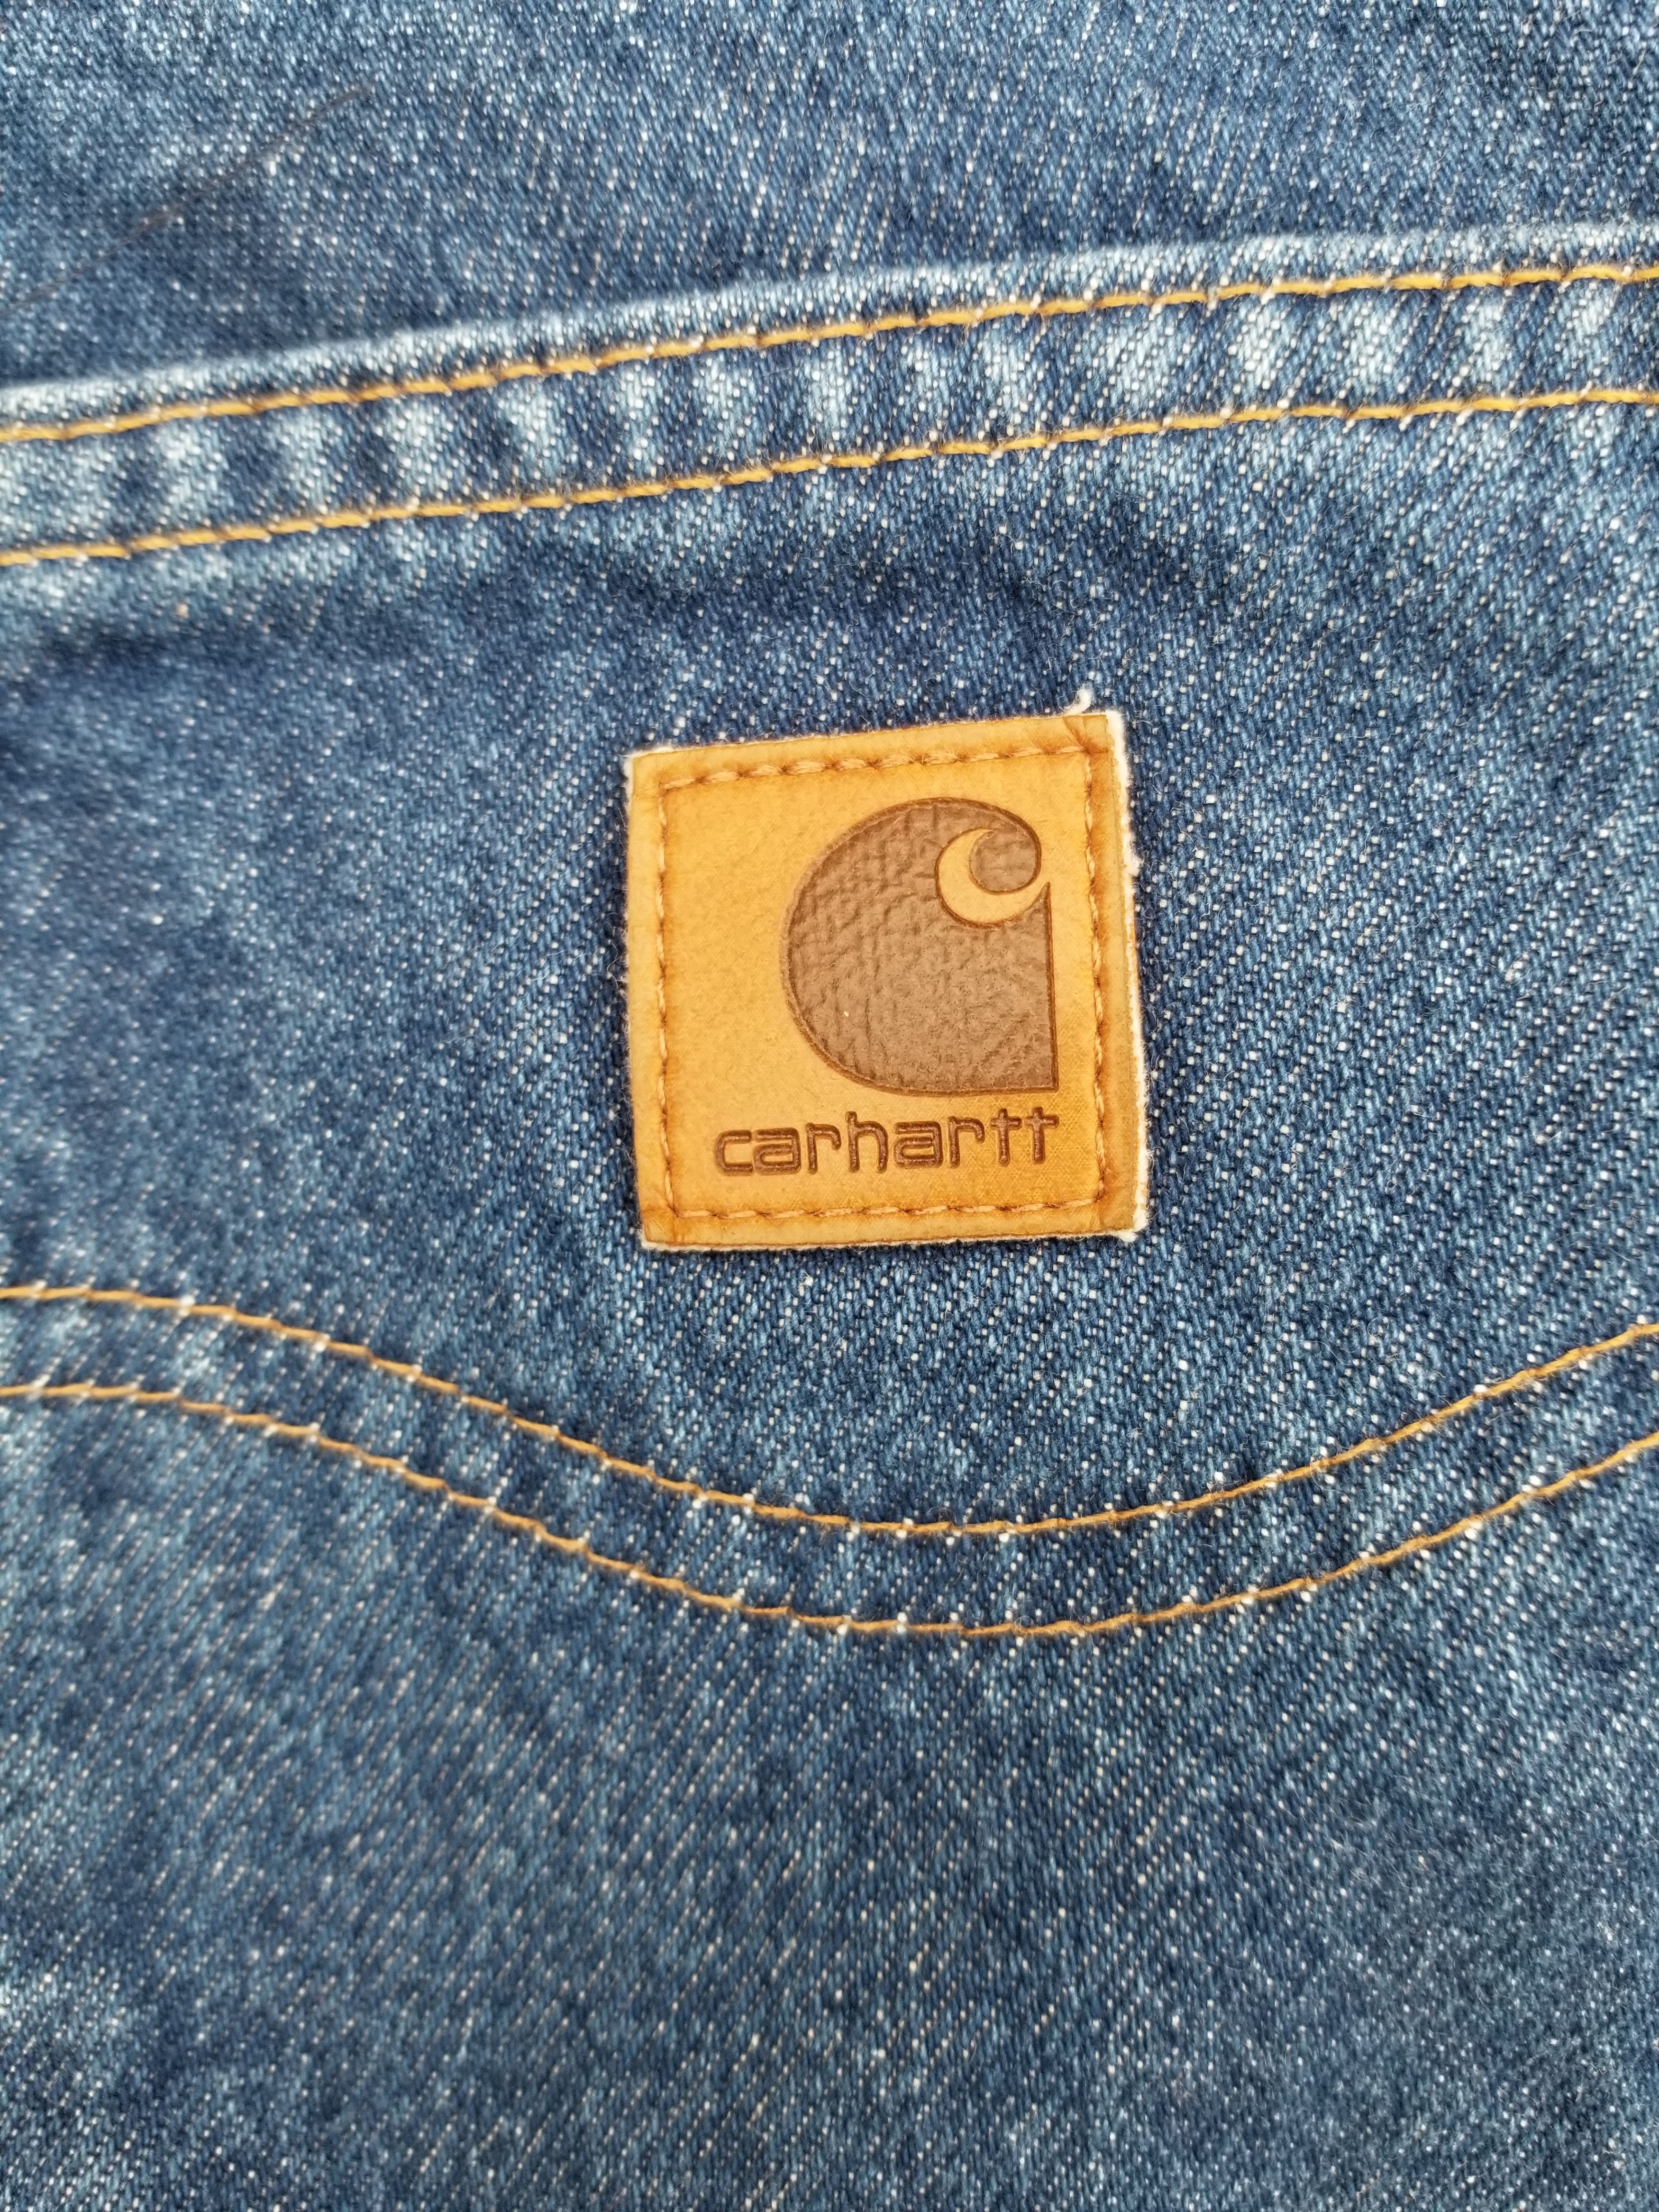 Vintage Vintage CARHARTT Relaxed Fit Blue Denim Jeans 501 Size US 34 / EU 50 - 3 Thumbnail